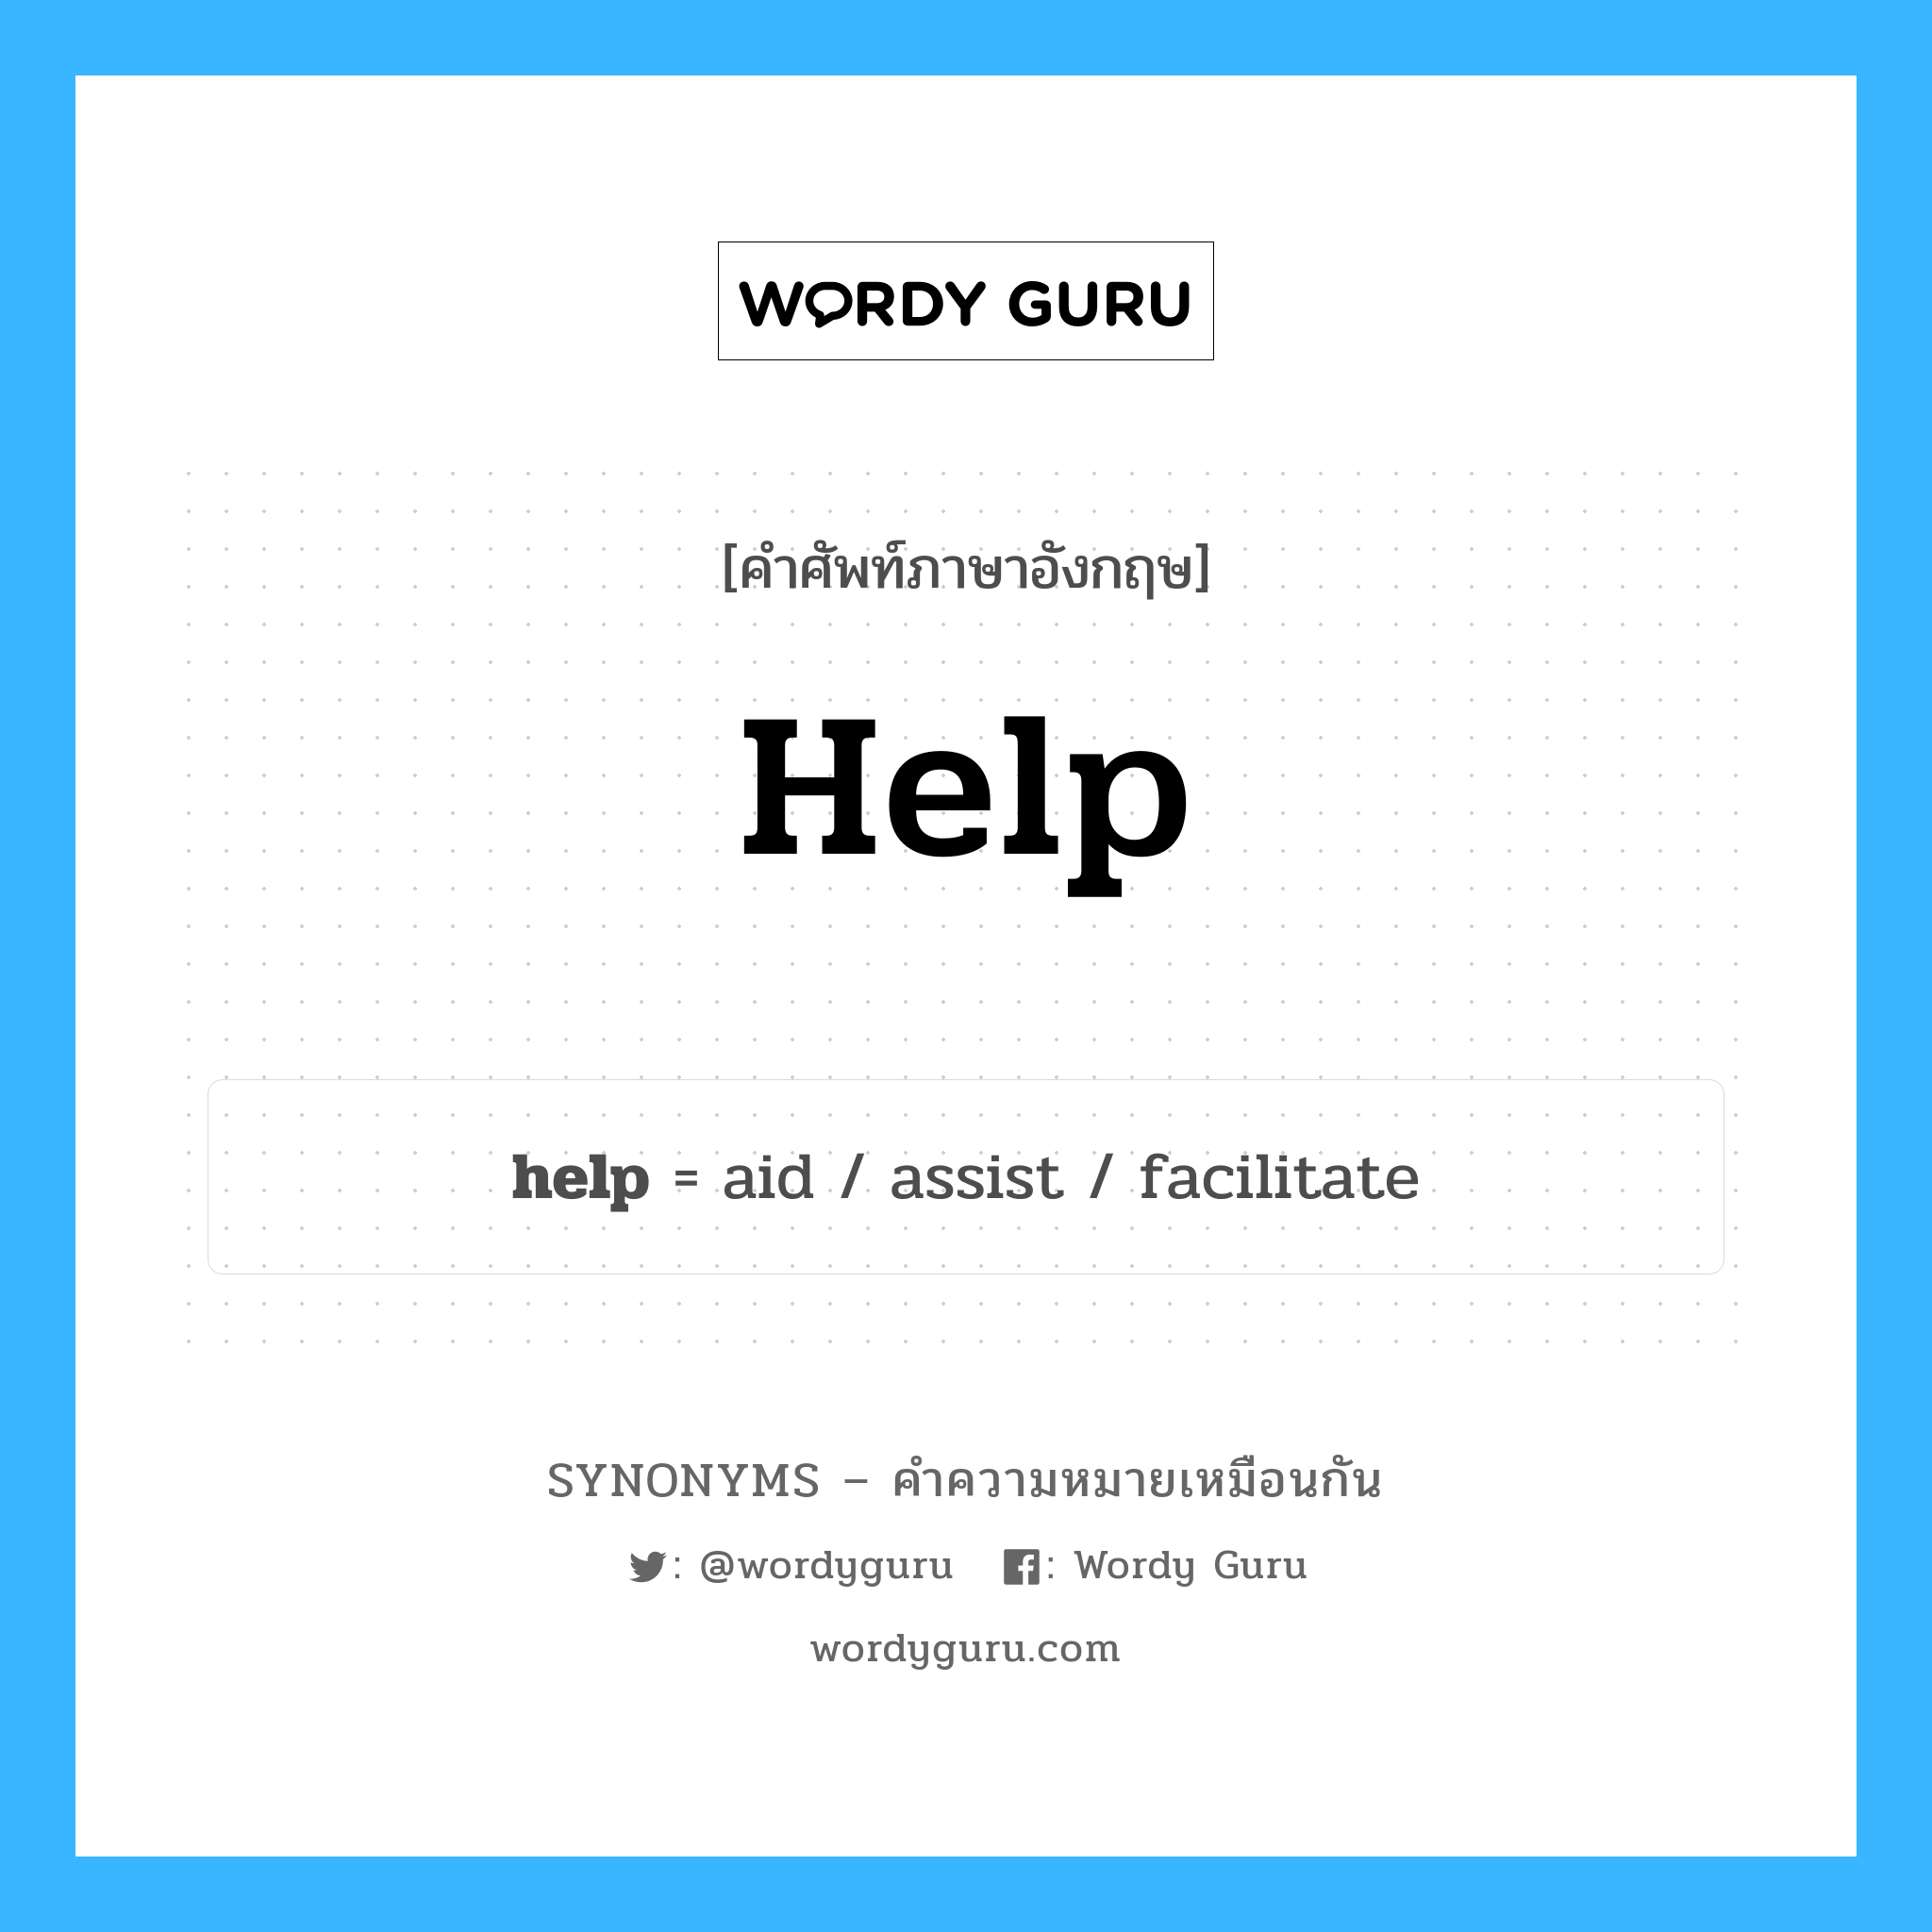 aid เป็นหนึ่งใน help และมีคำอื่น ๆ อีกดังนี้, คำศัพท์ภาษาอังกฤษ aid ความหมายคล้ายกันกับ help แปลว่า ความช่วยเหลือ หมวด help